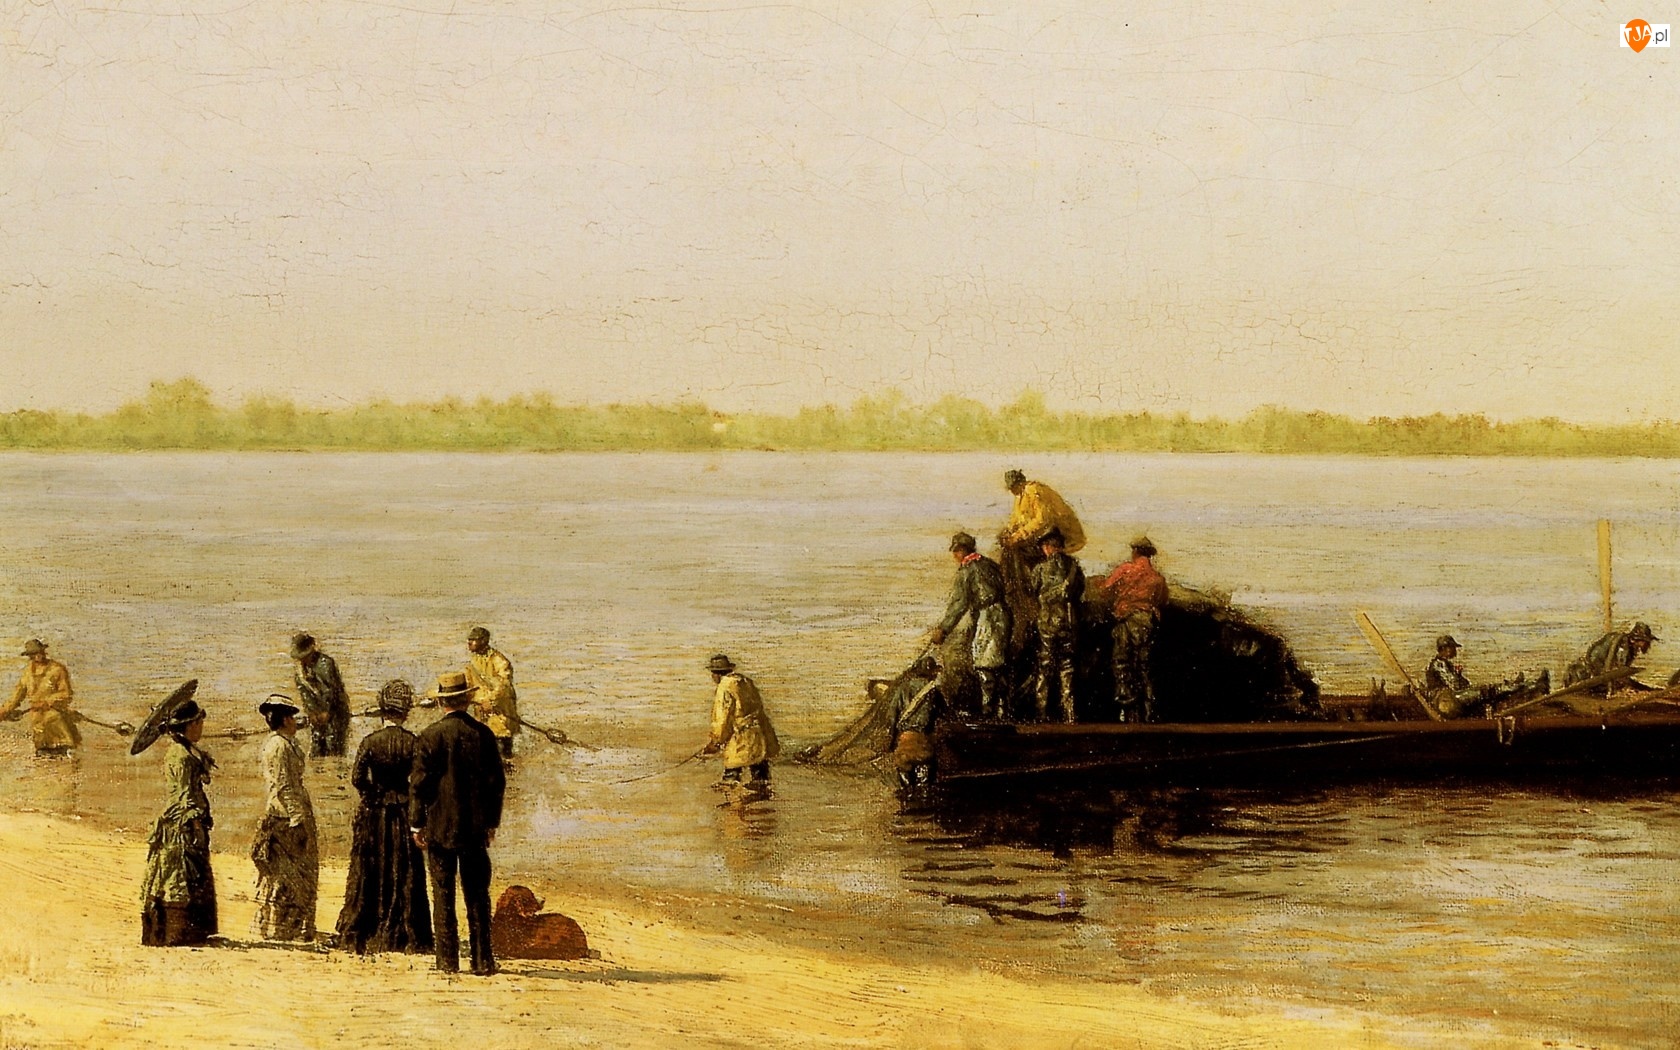 Thomas Eakins, Rybacy, Morze, Łódź